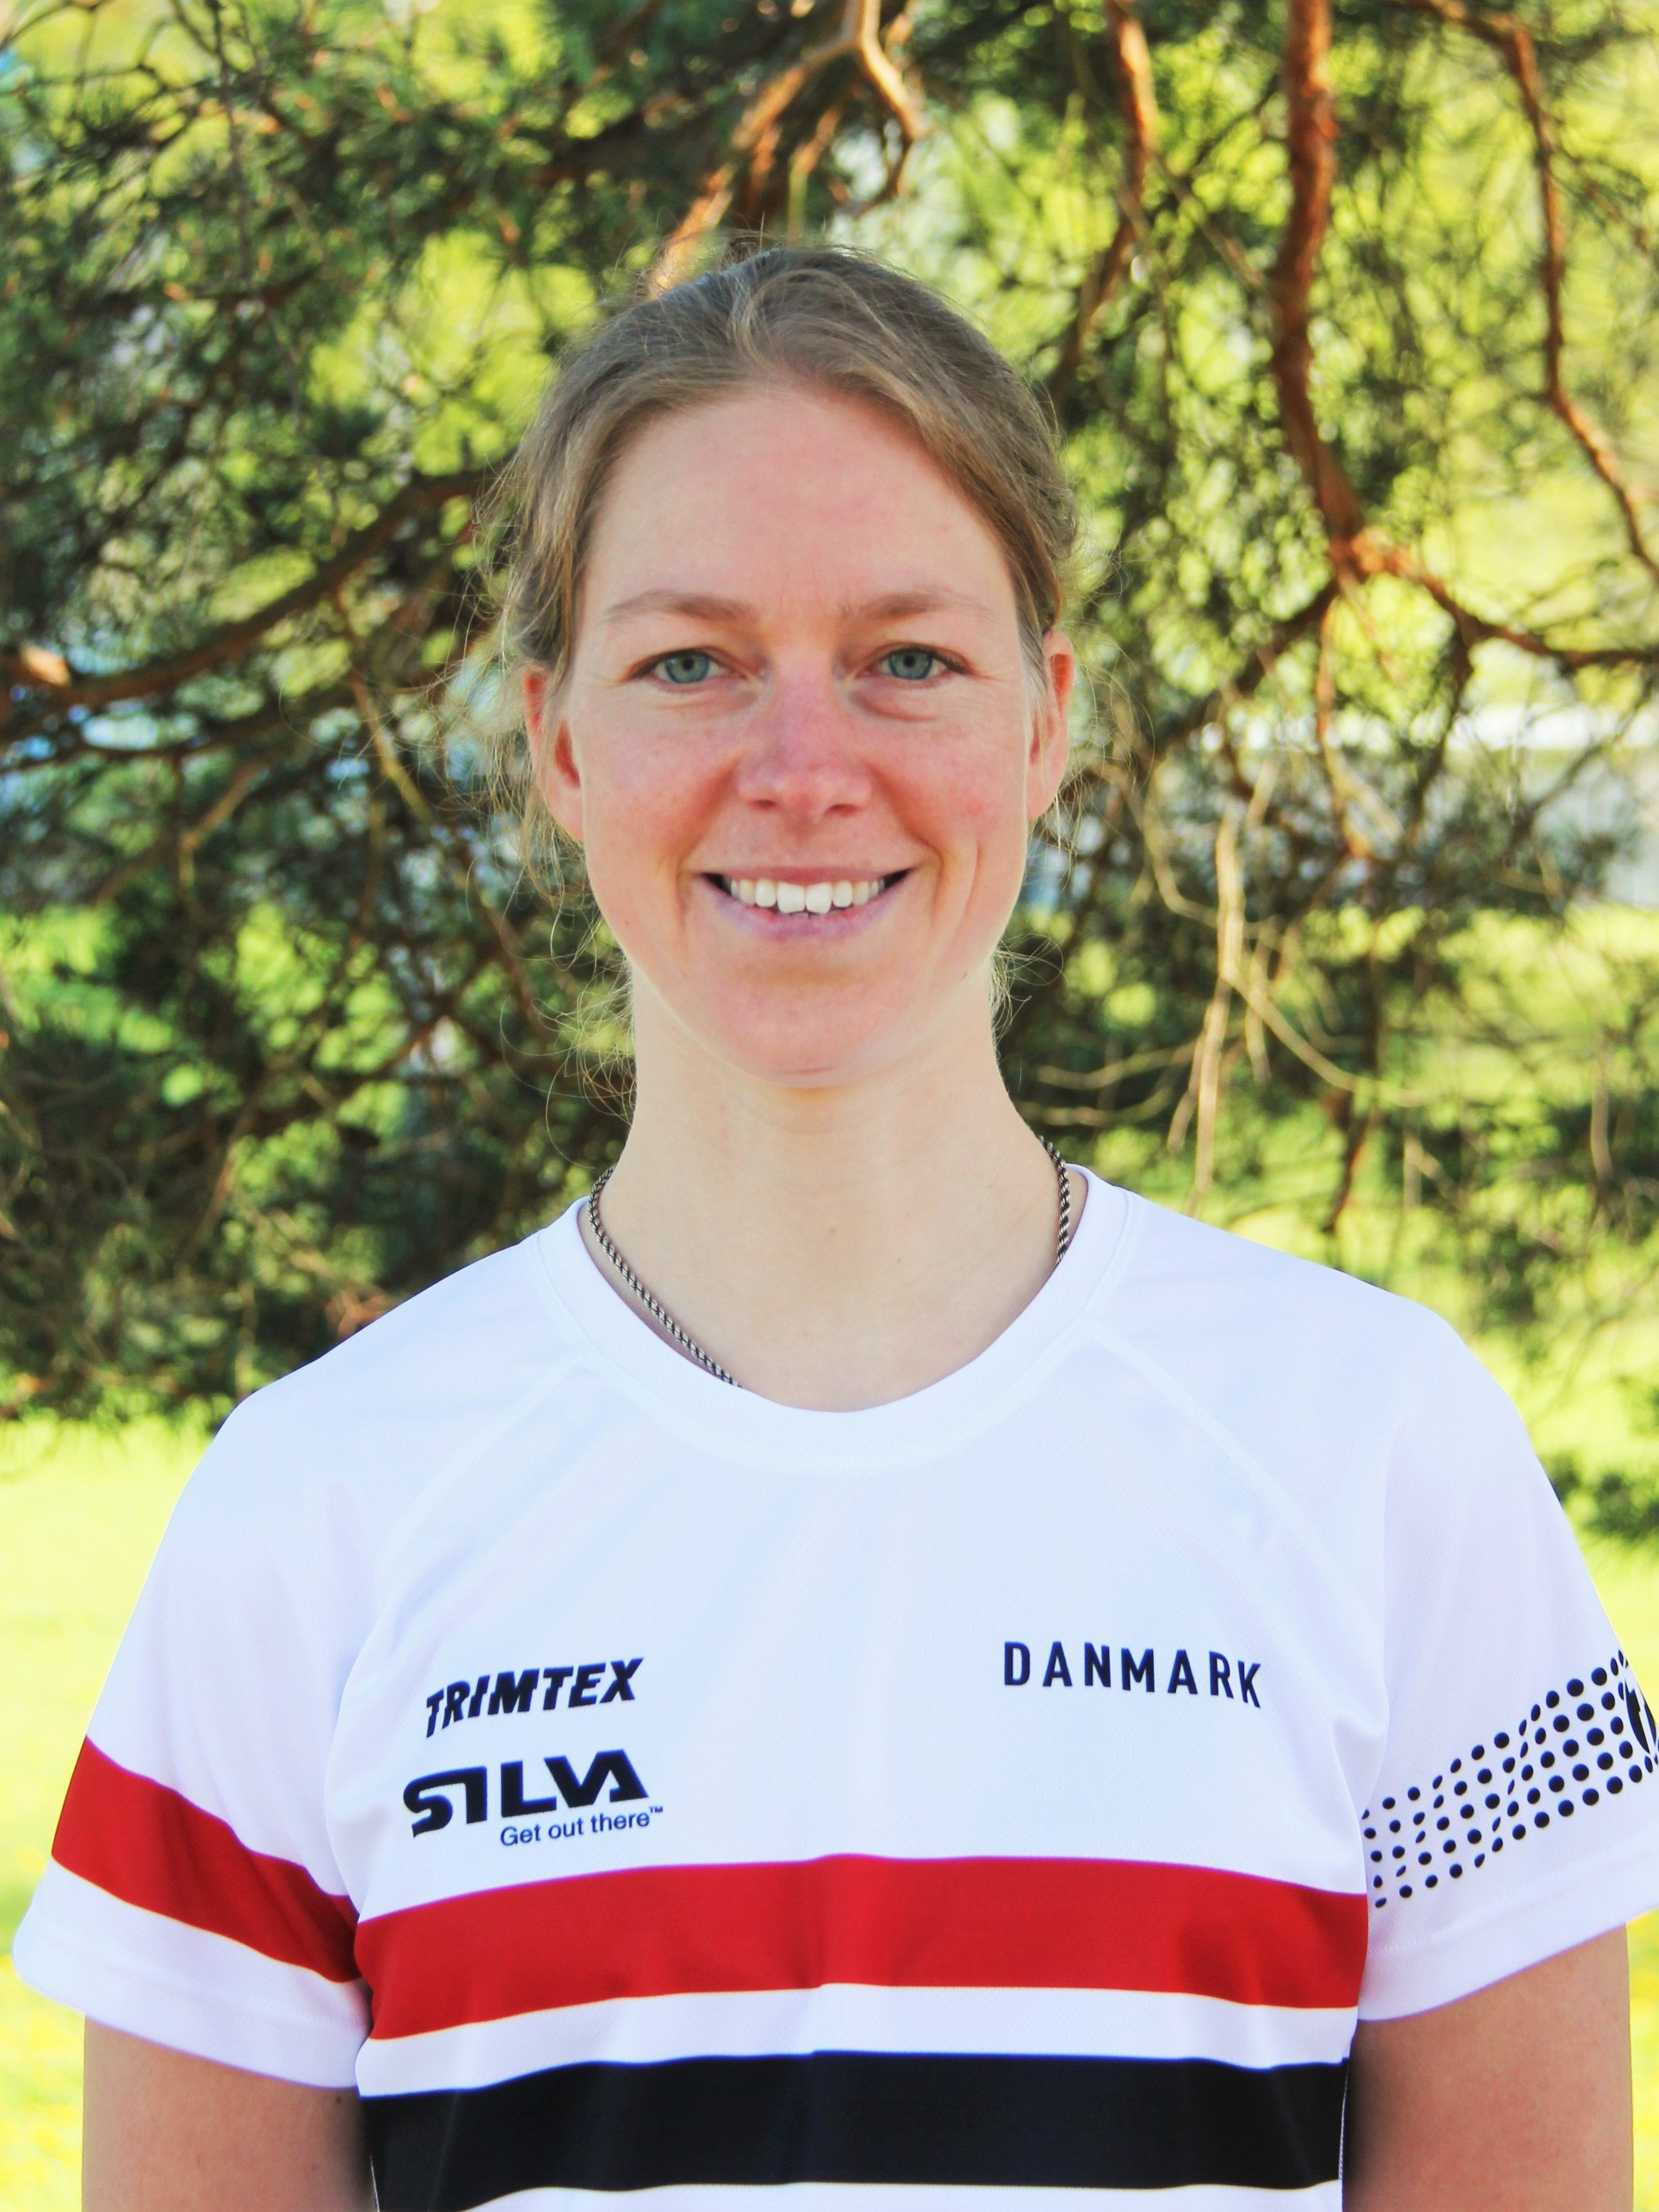 Camilla Søgaard